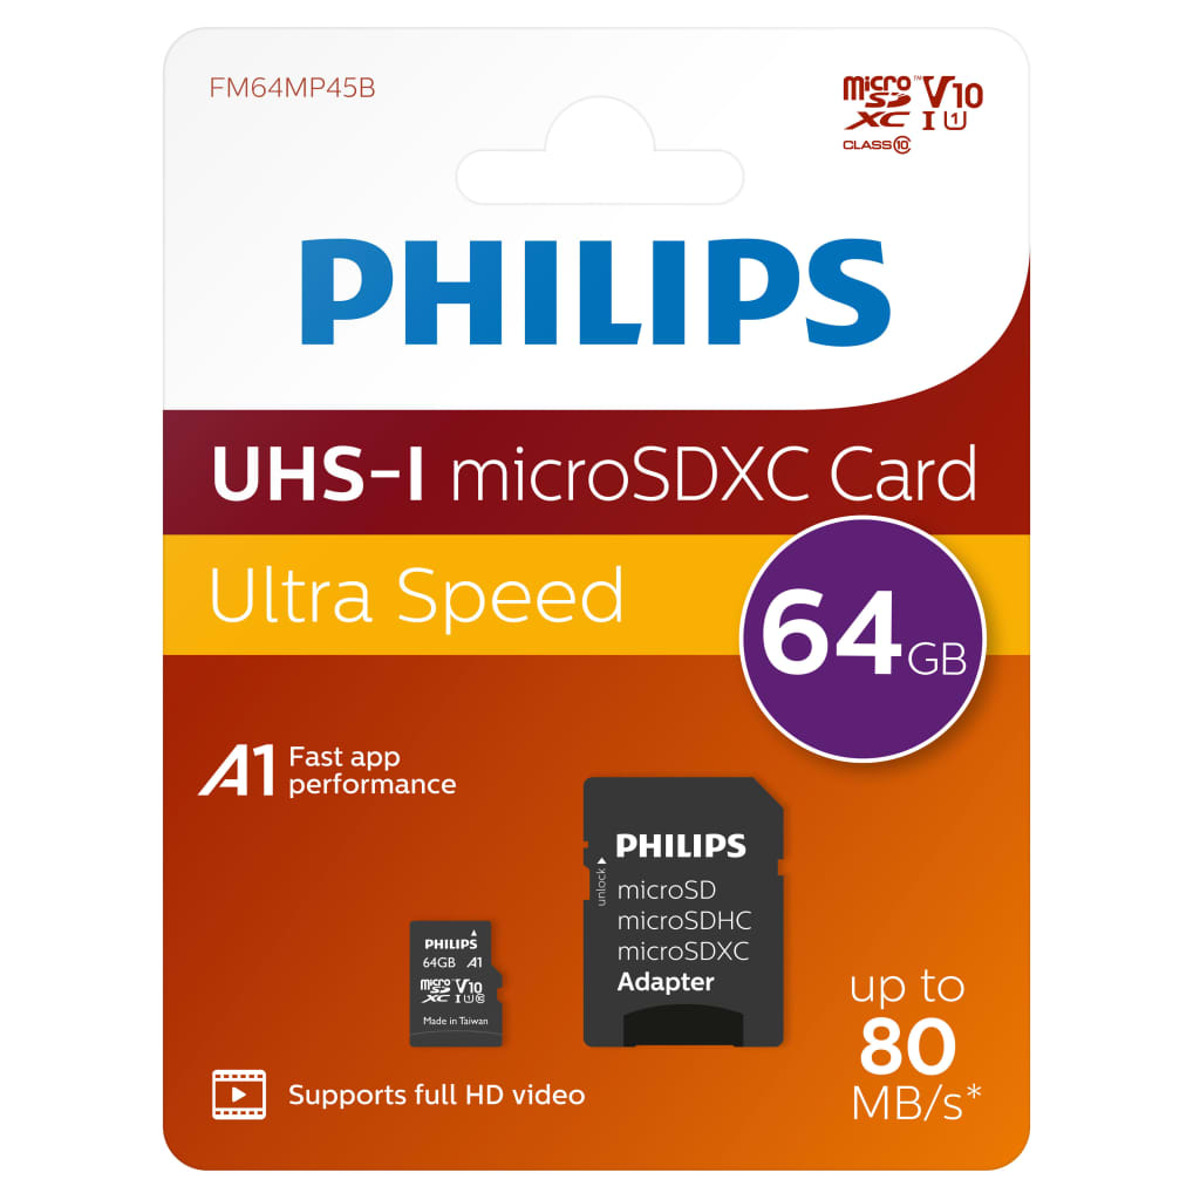 Mbit/s 64 U1, Adapter, Speicherkarte, 64 PHILIPS UHS-I Micro-SDHX GB, 10 80 Class Micro-SDHC